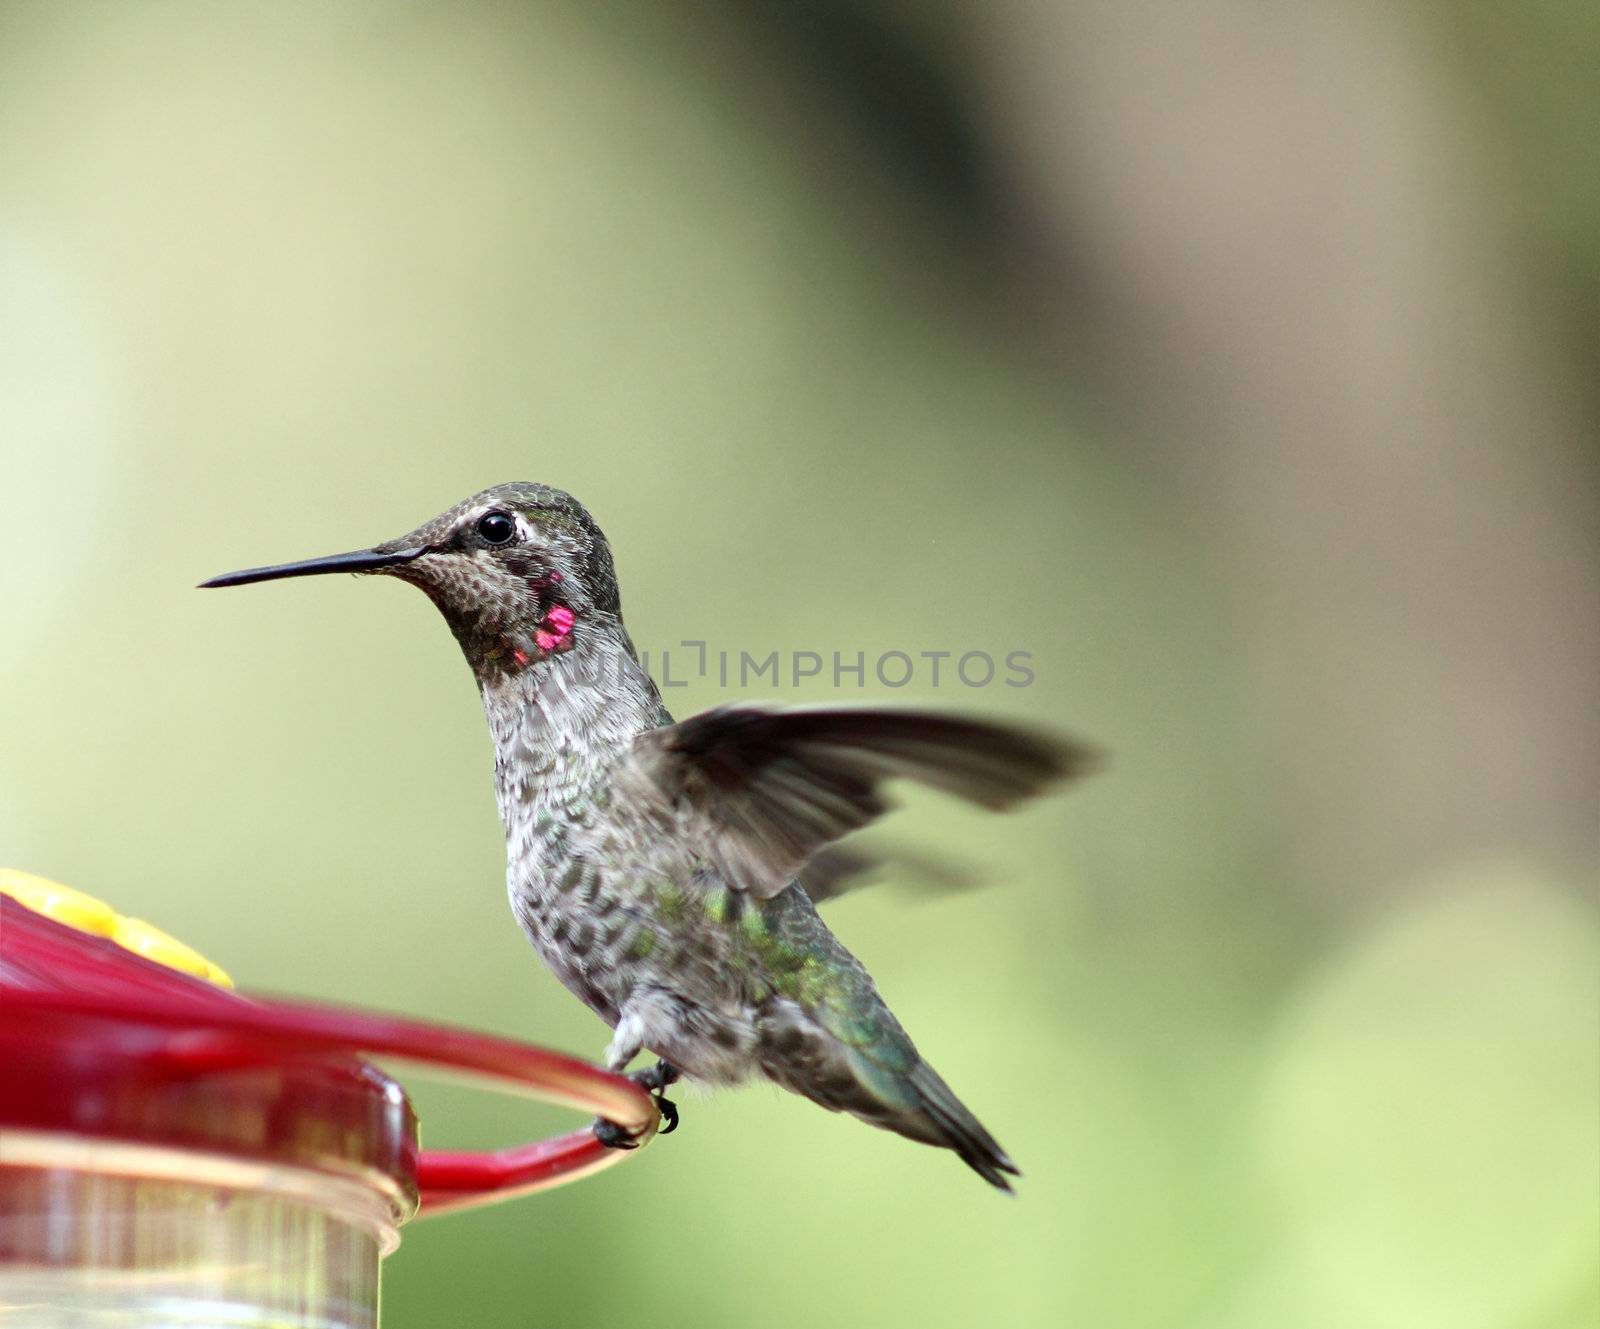 a hummingbird pauses on a backyard feeder
